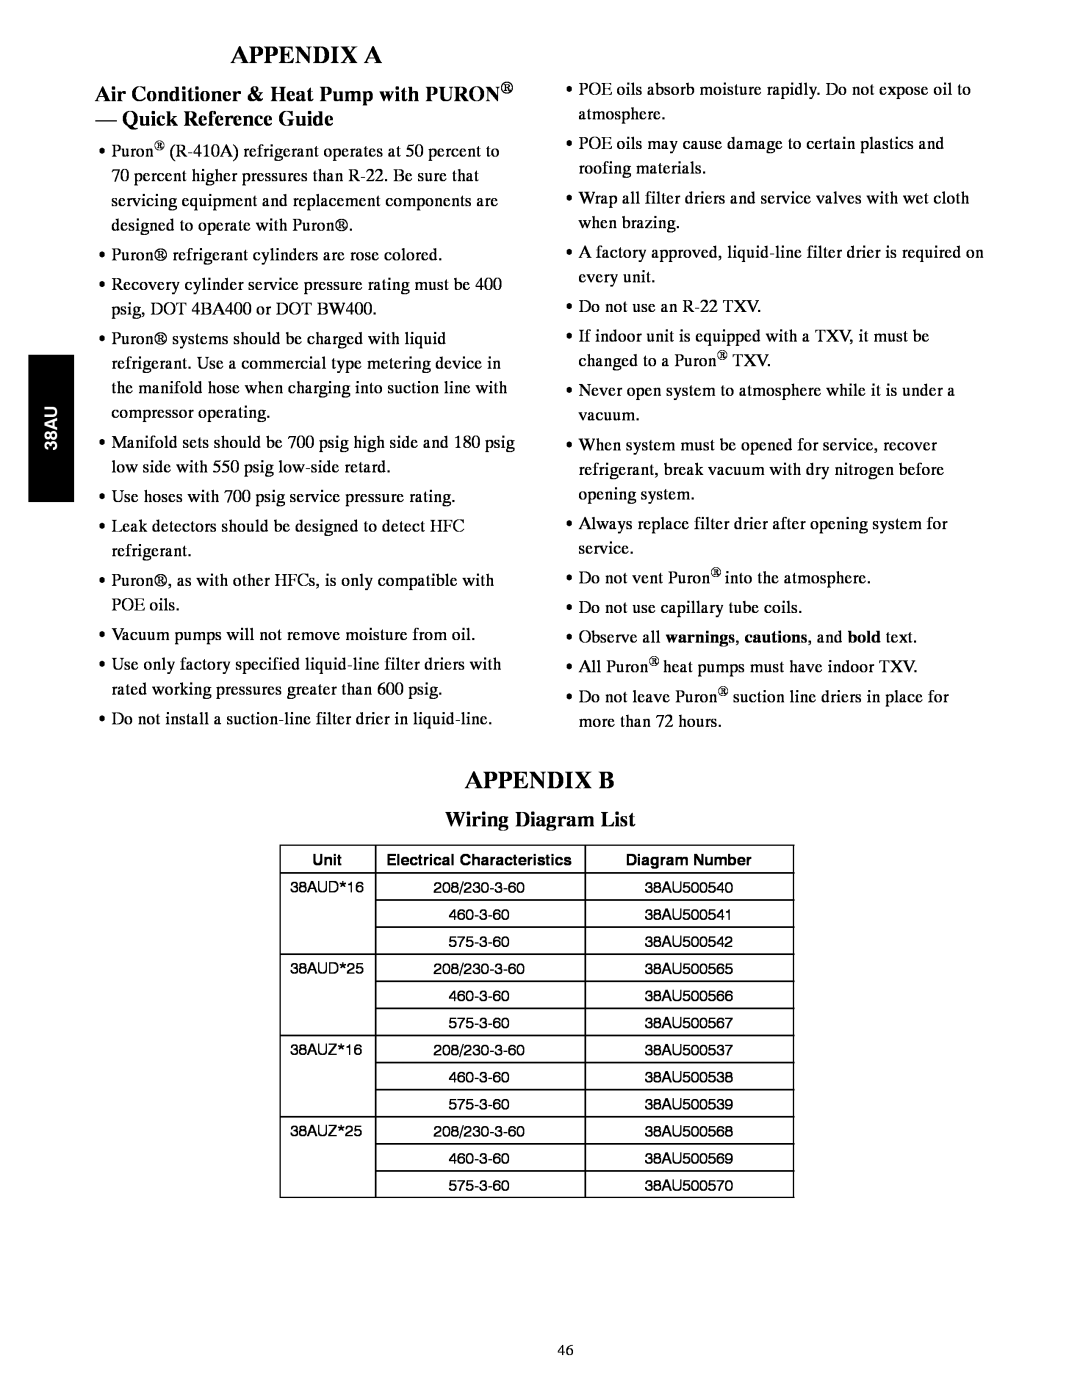 Carrier 38AU Appendix A, Appendix B, Air Conditioner & Heat Pump with PURON→, Quick Reference Guide, Wiring Diagram List 